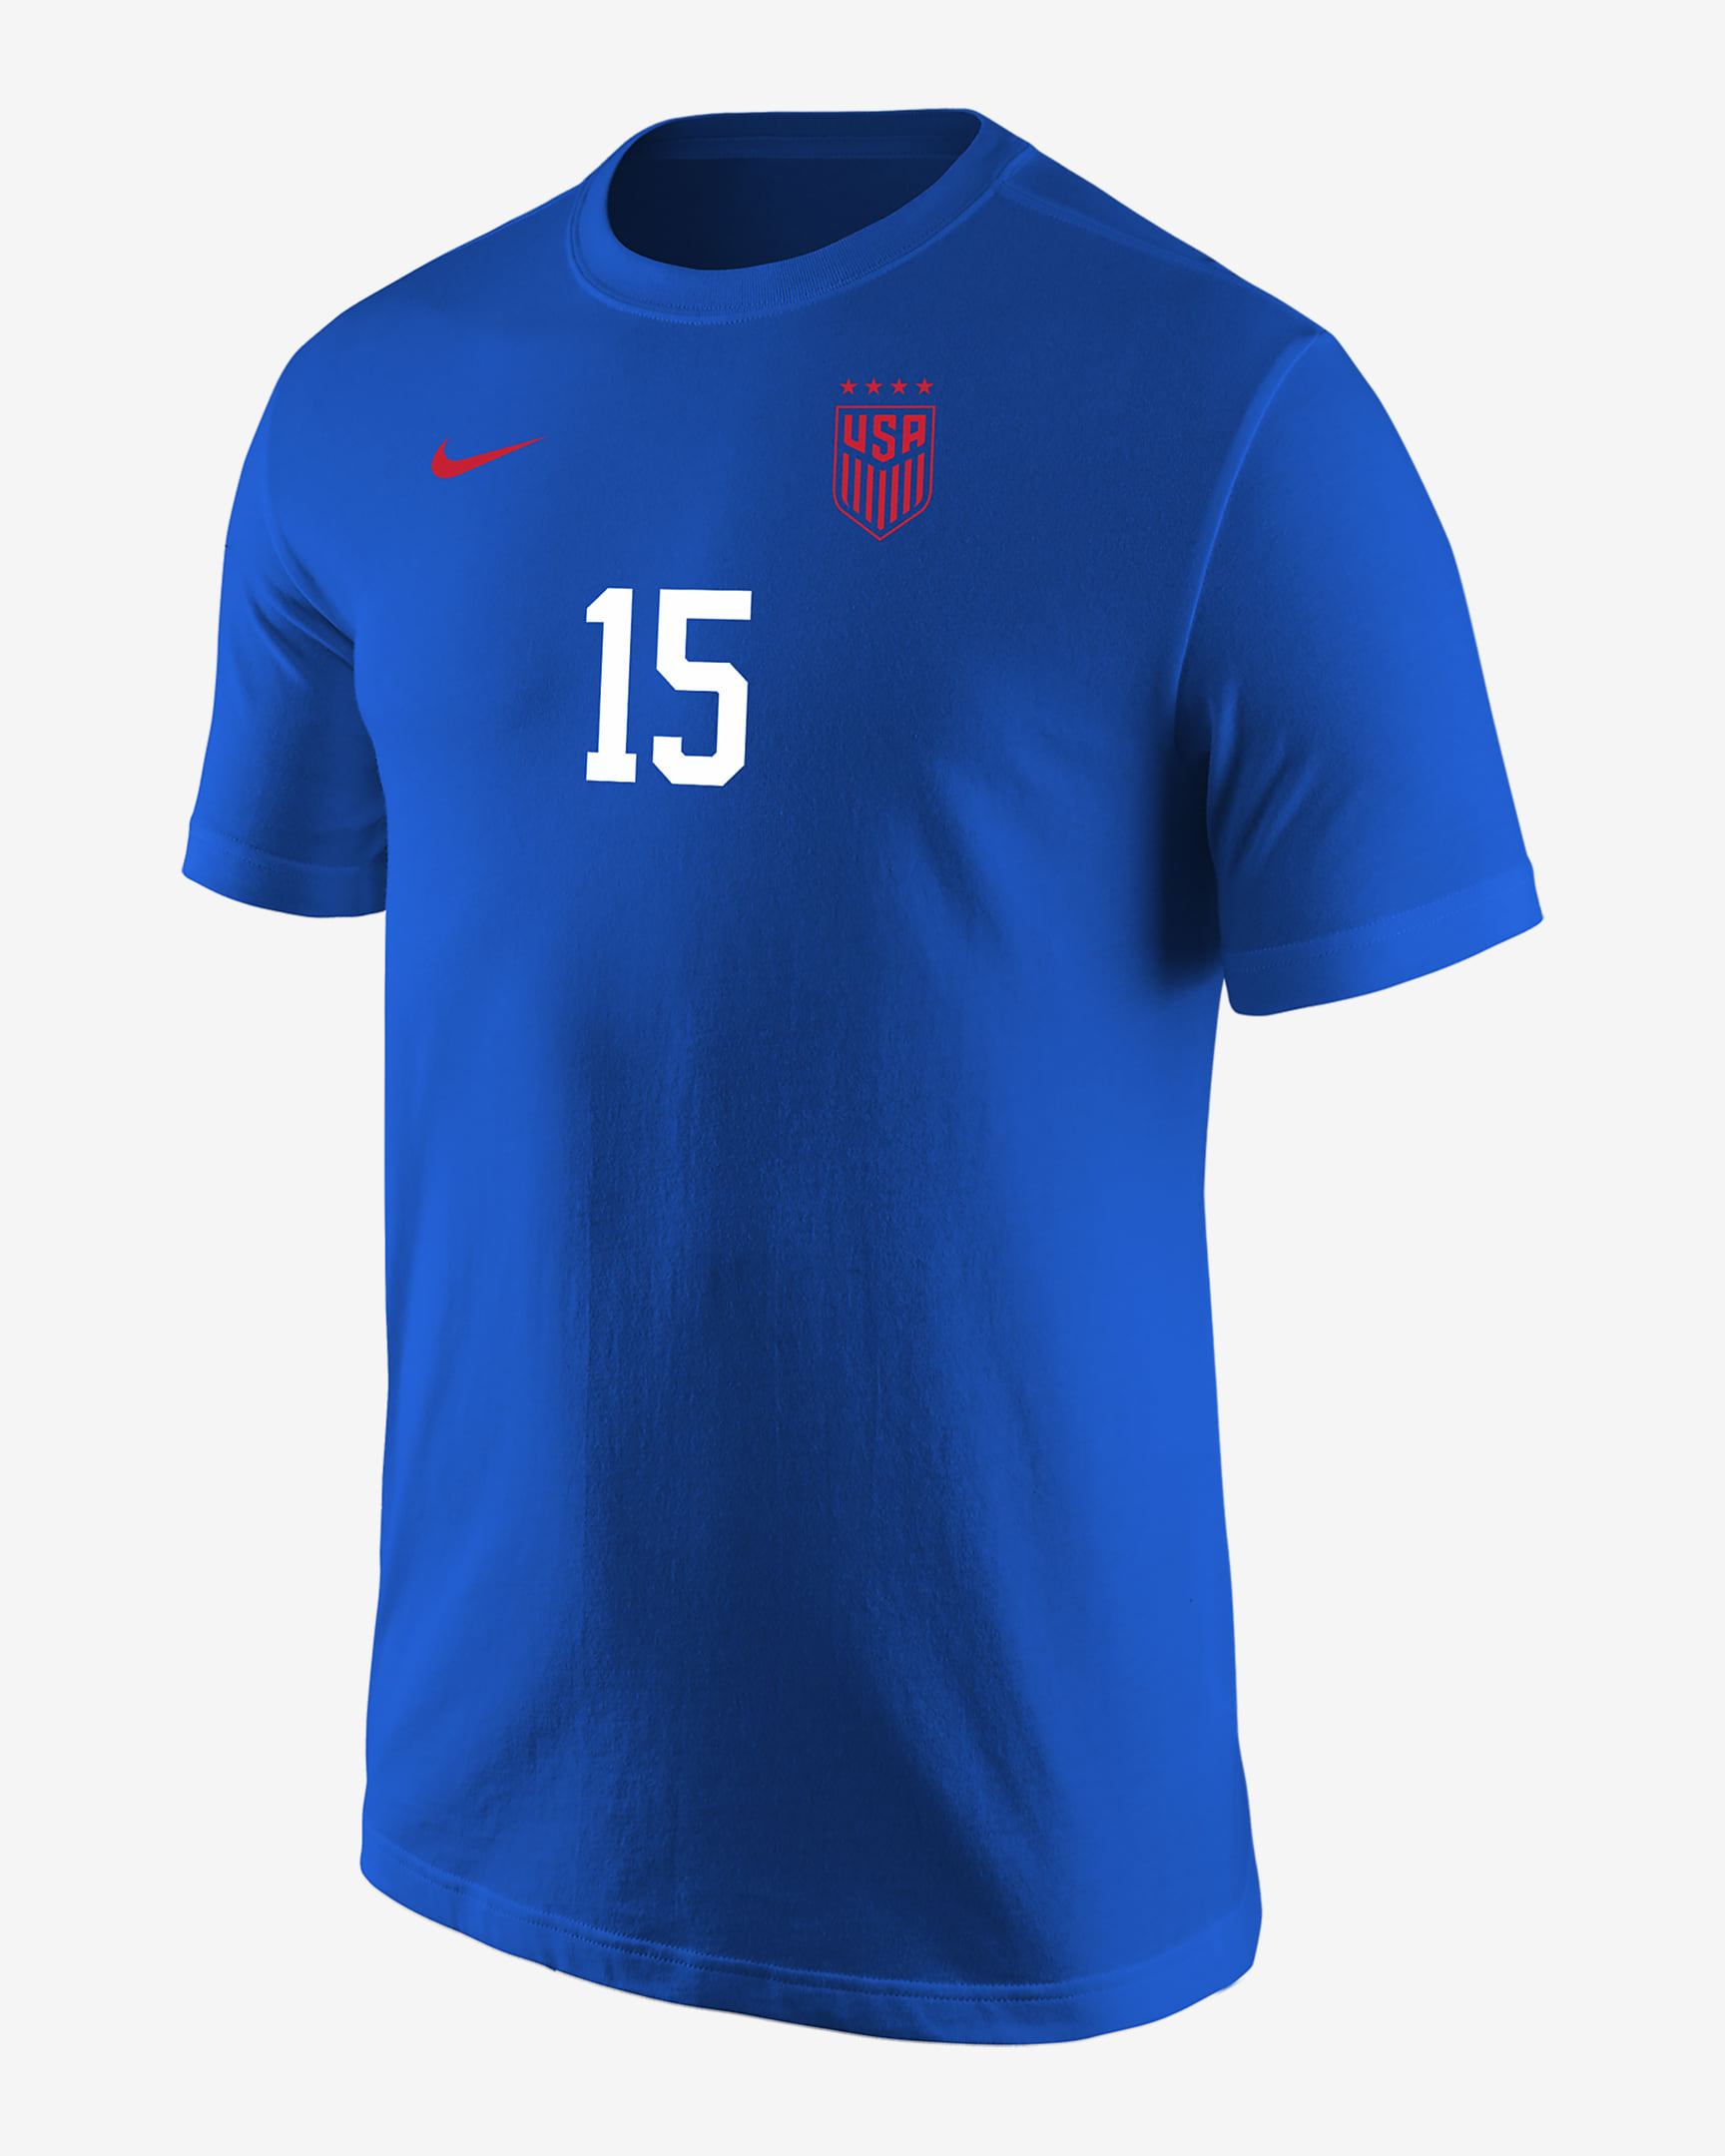 Megan Rapinoe Uswnt Mens Nike Soccer T Shirt 